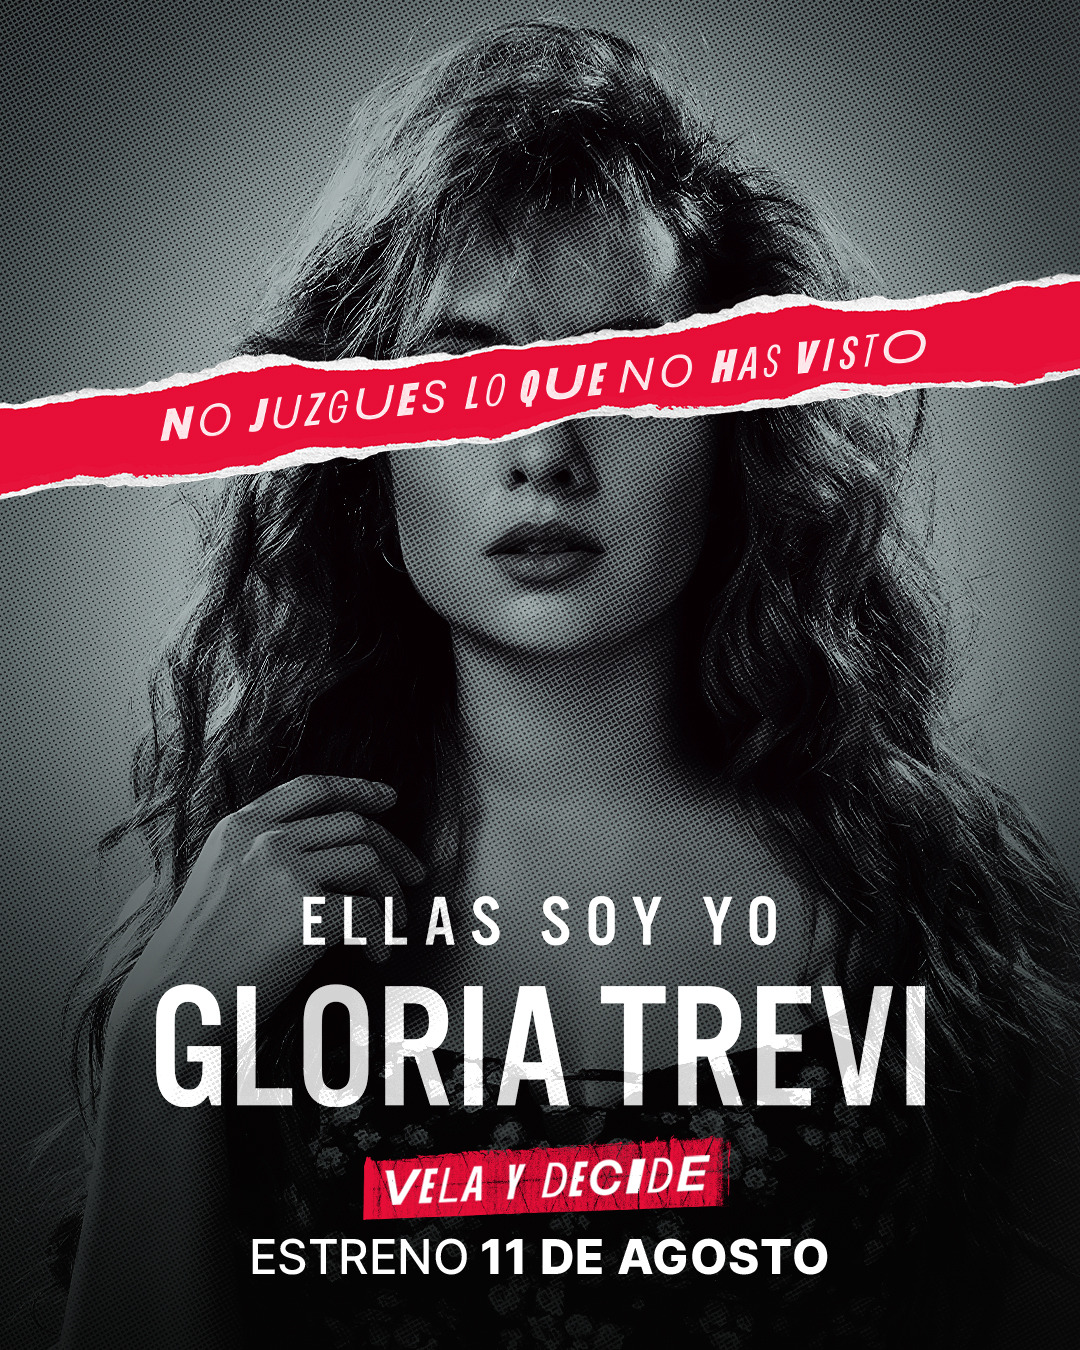 Extra Large TV Poster Image for Gloria Trevi: Ellas soy yo 